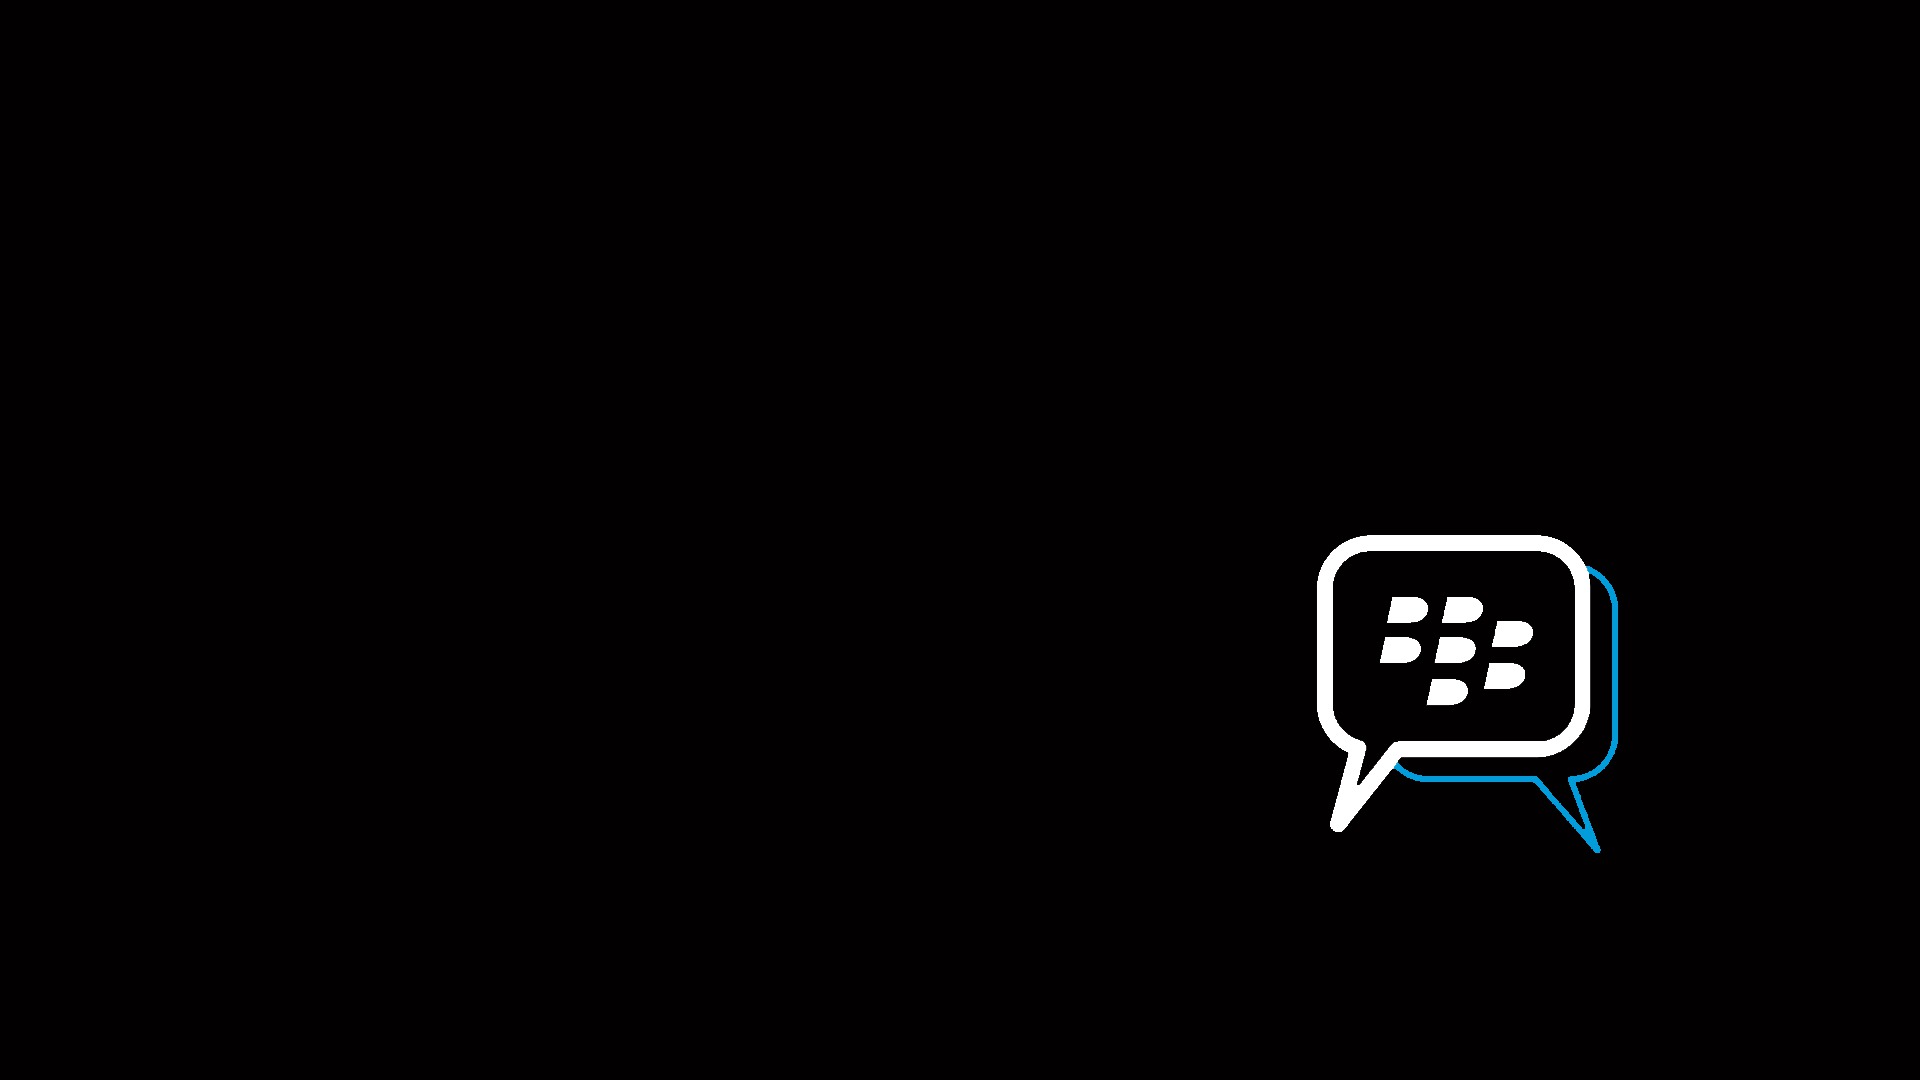 Blackberry-Logo-HD-Wallpapers | Download Free Desktop Wallpaper ...